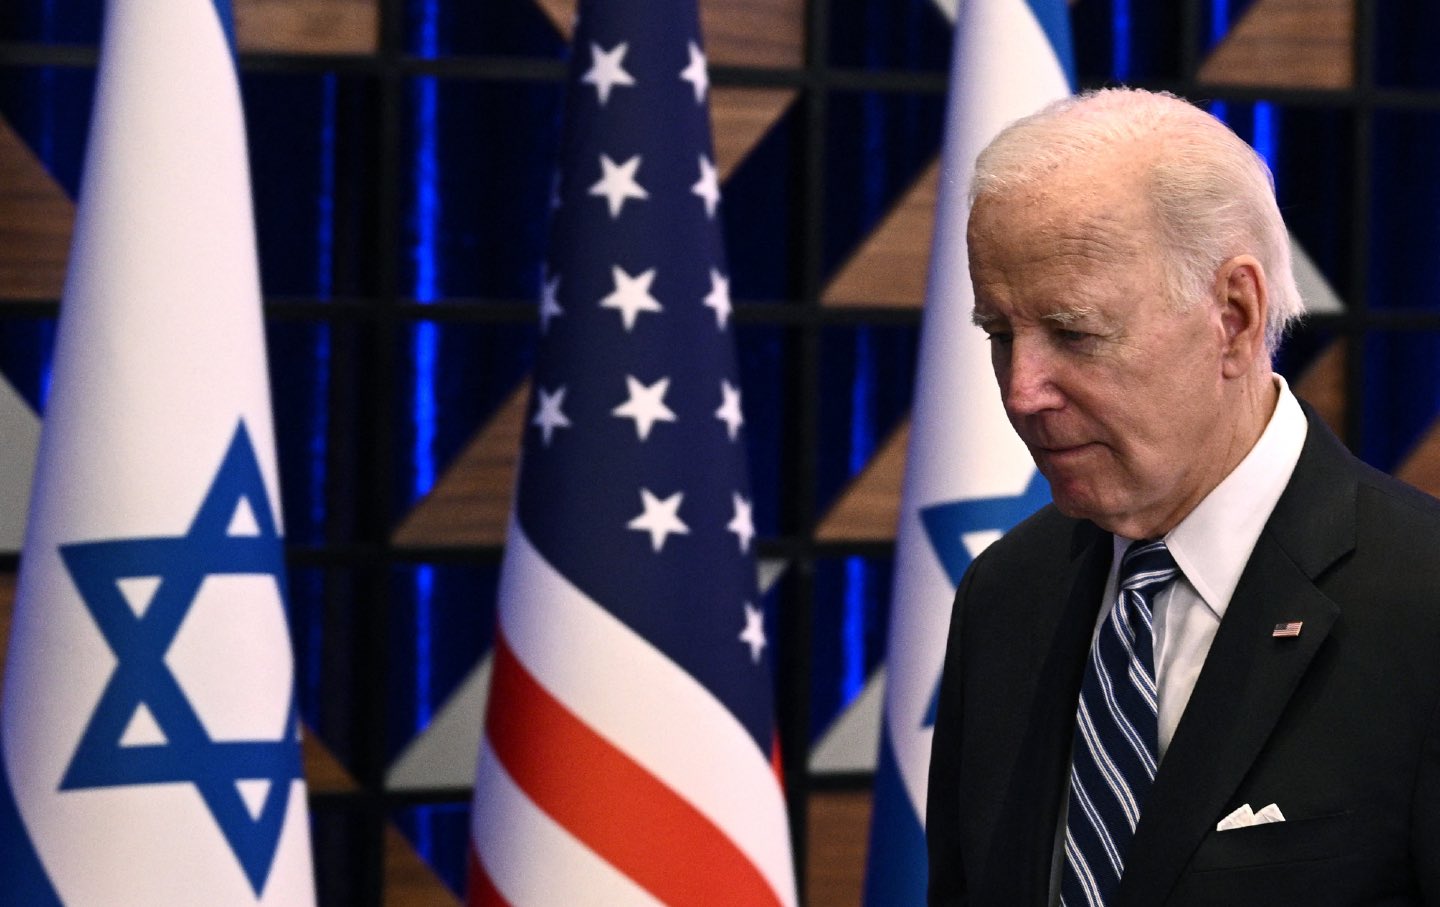 Biden with Israeli, US flags